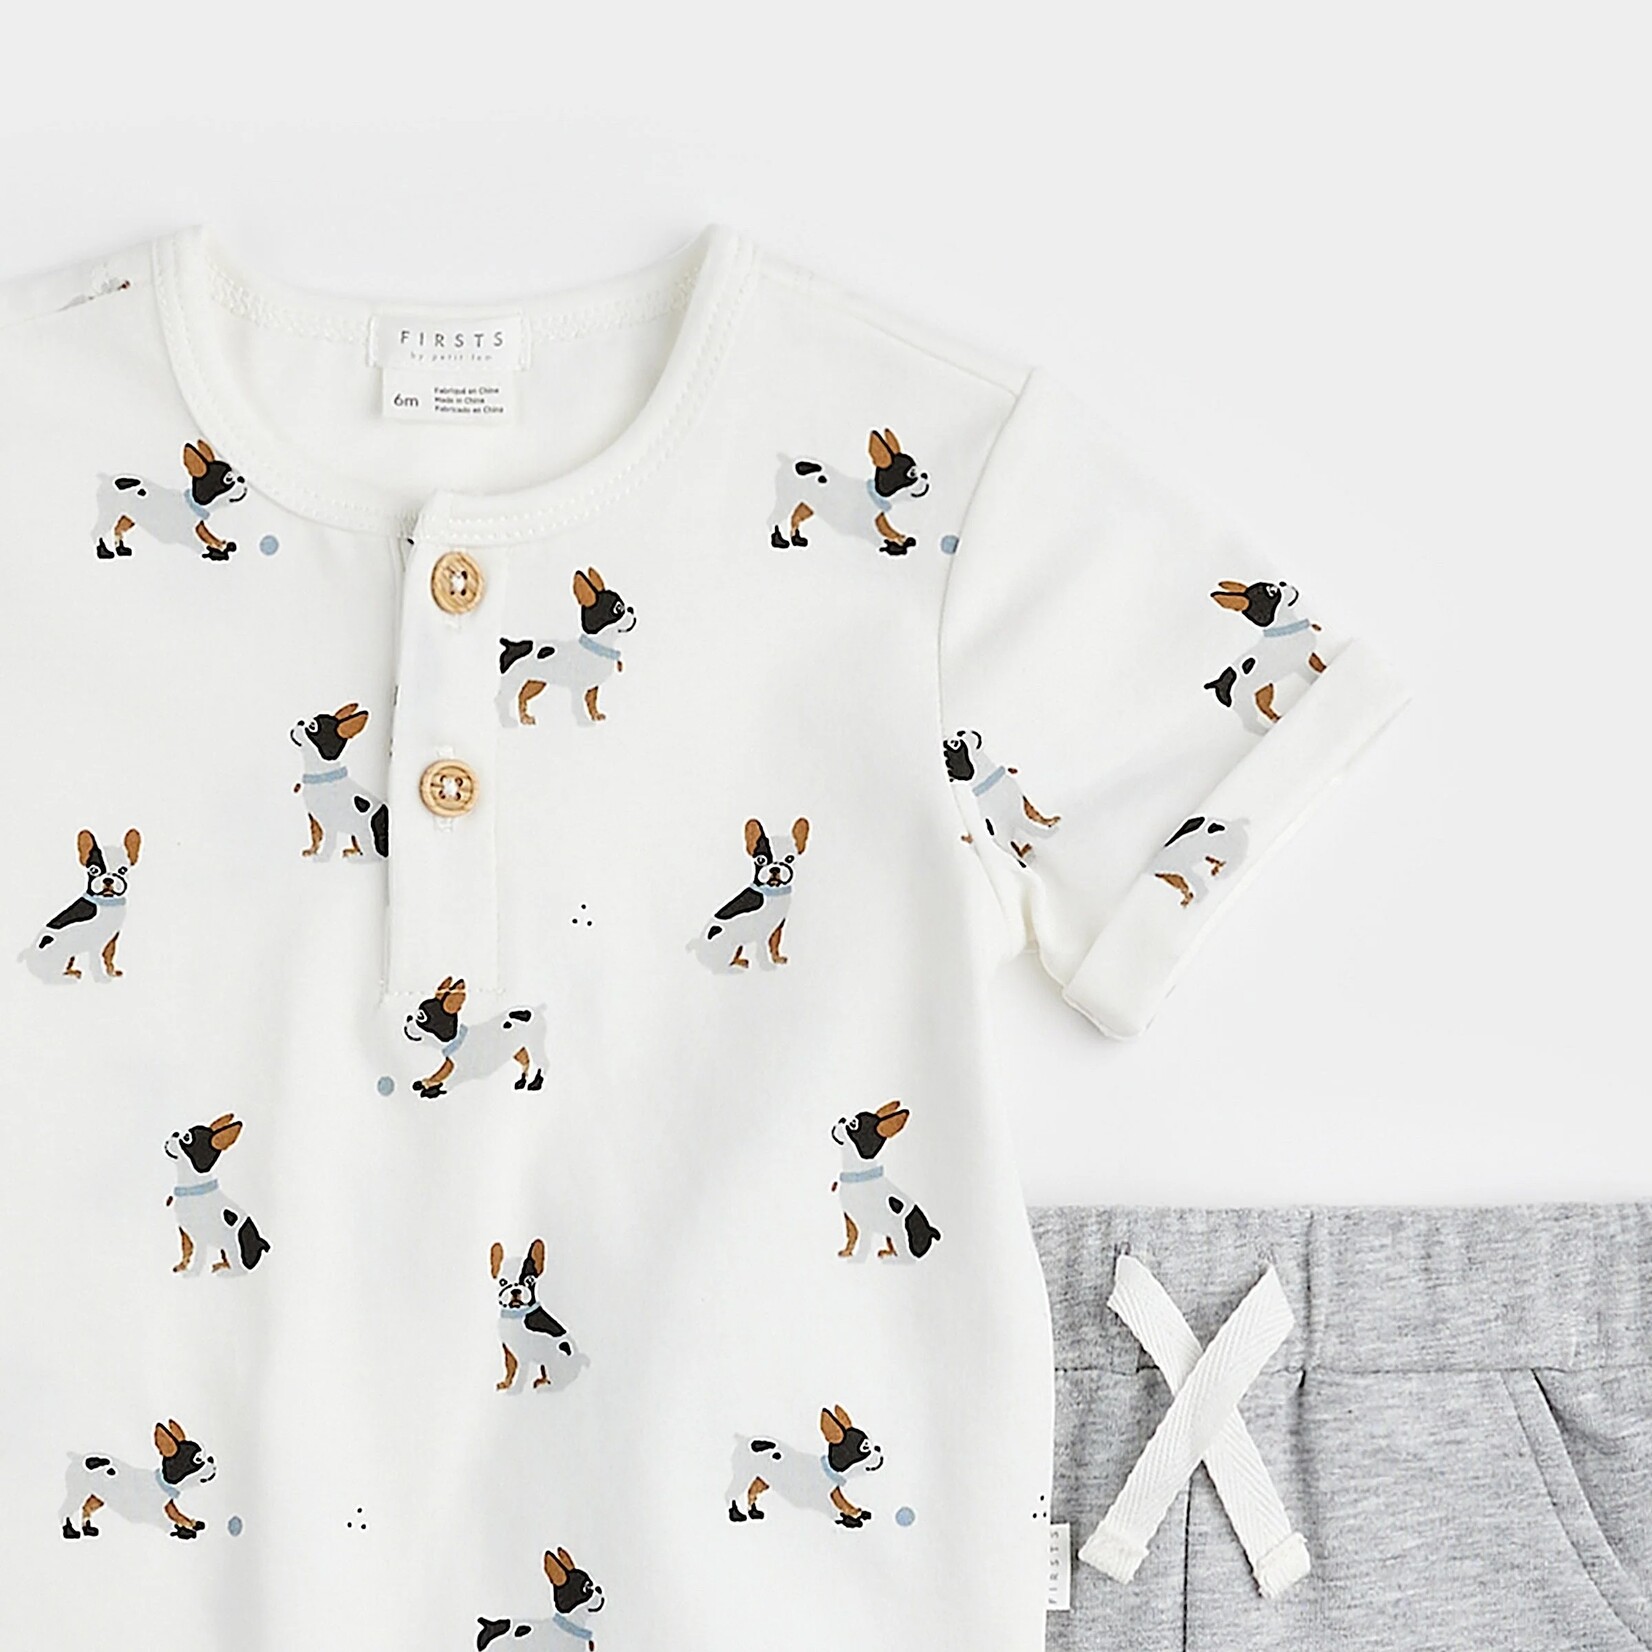 Petit Lem PETIT LEM - Two-Piece Set: Short-Sleeved T-shirt with French Bulldog Print and Gray Pants